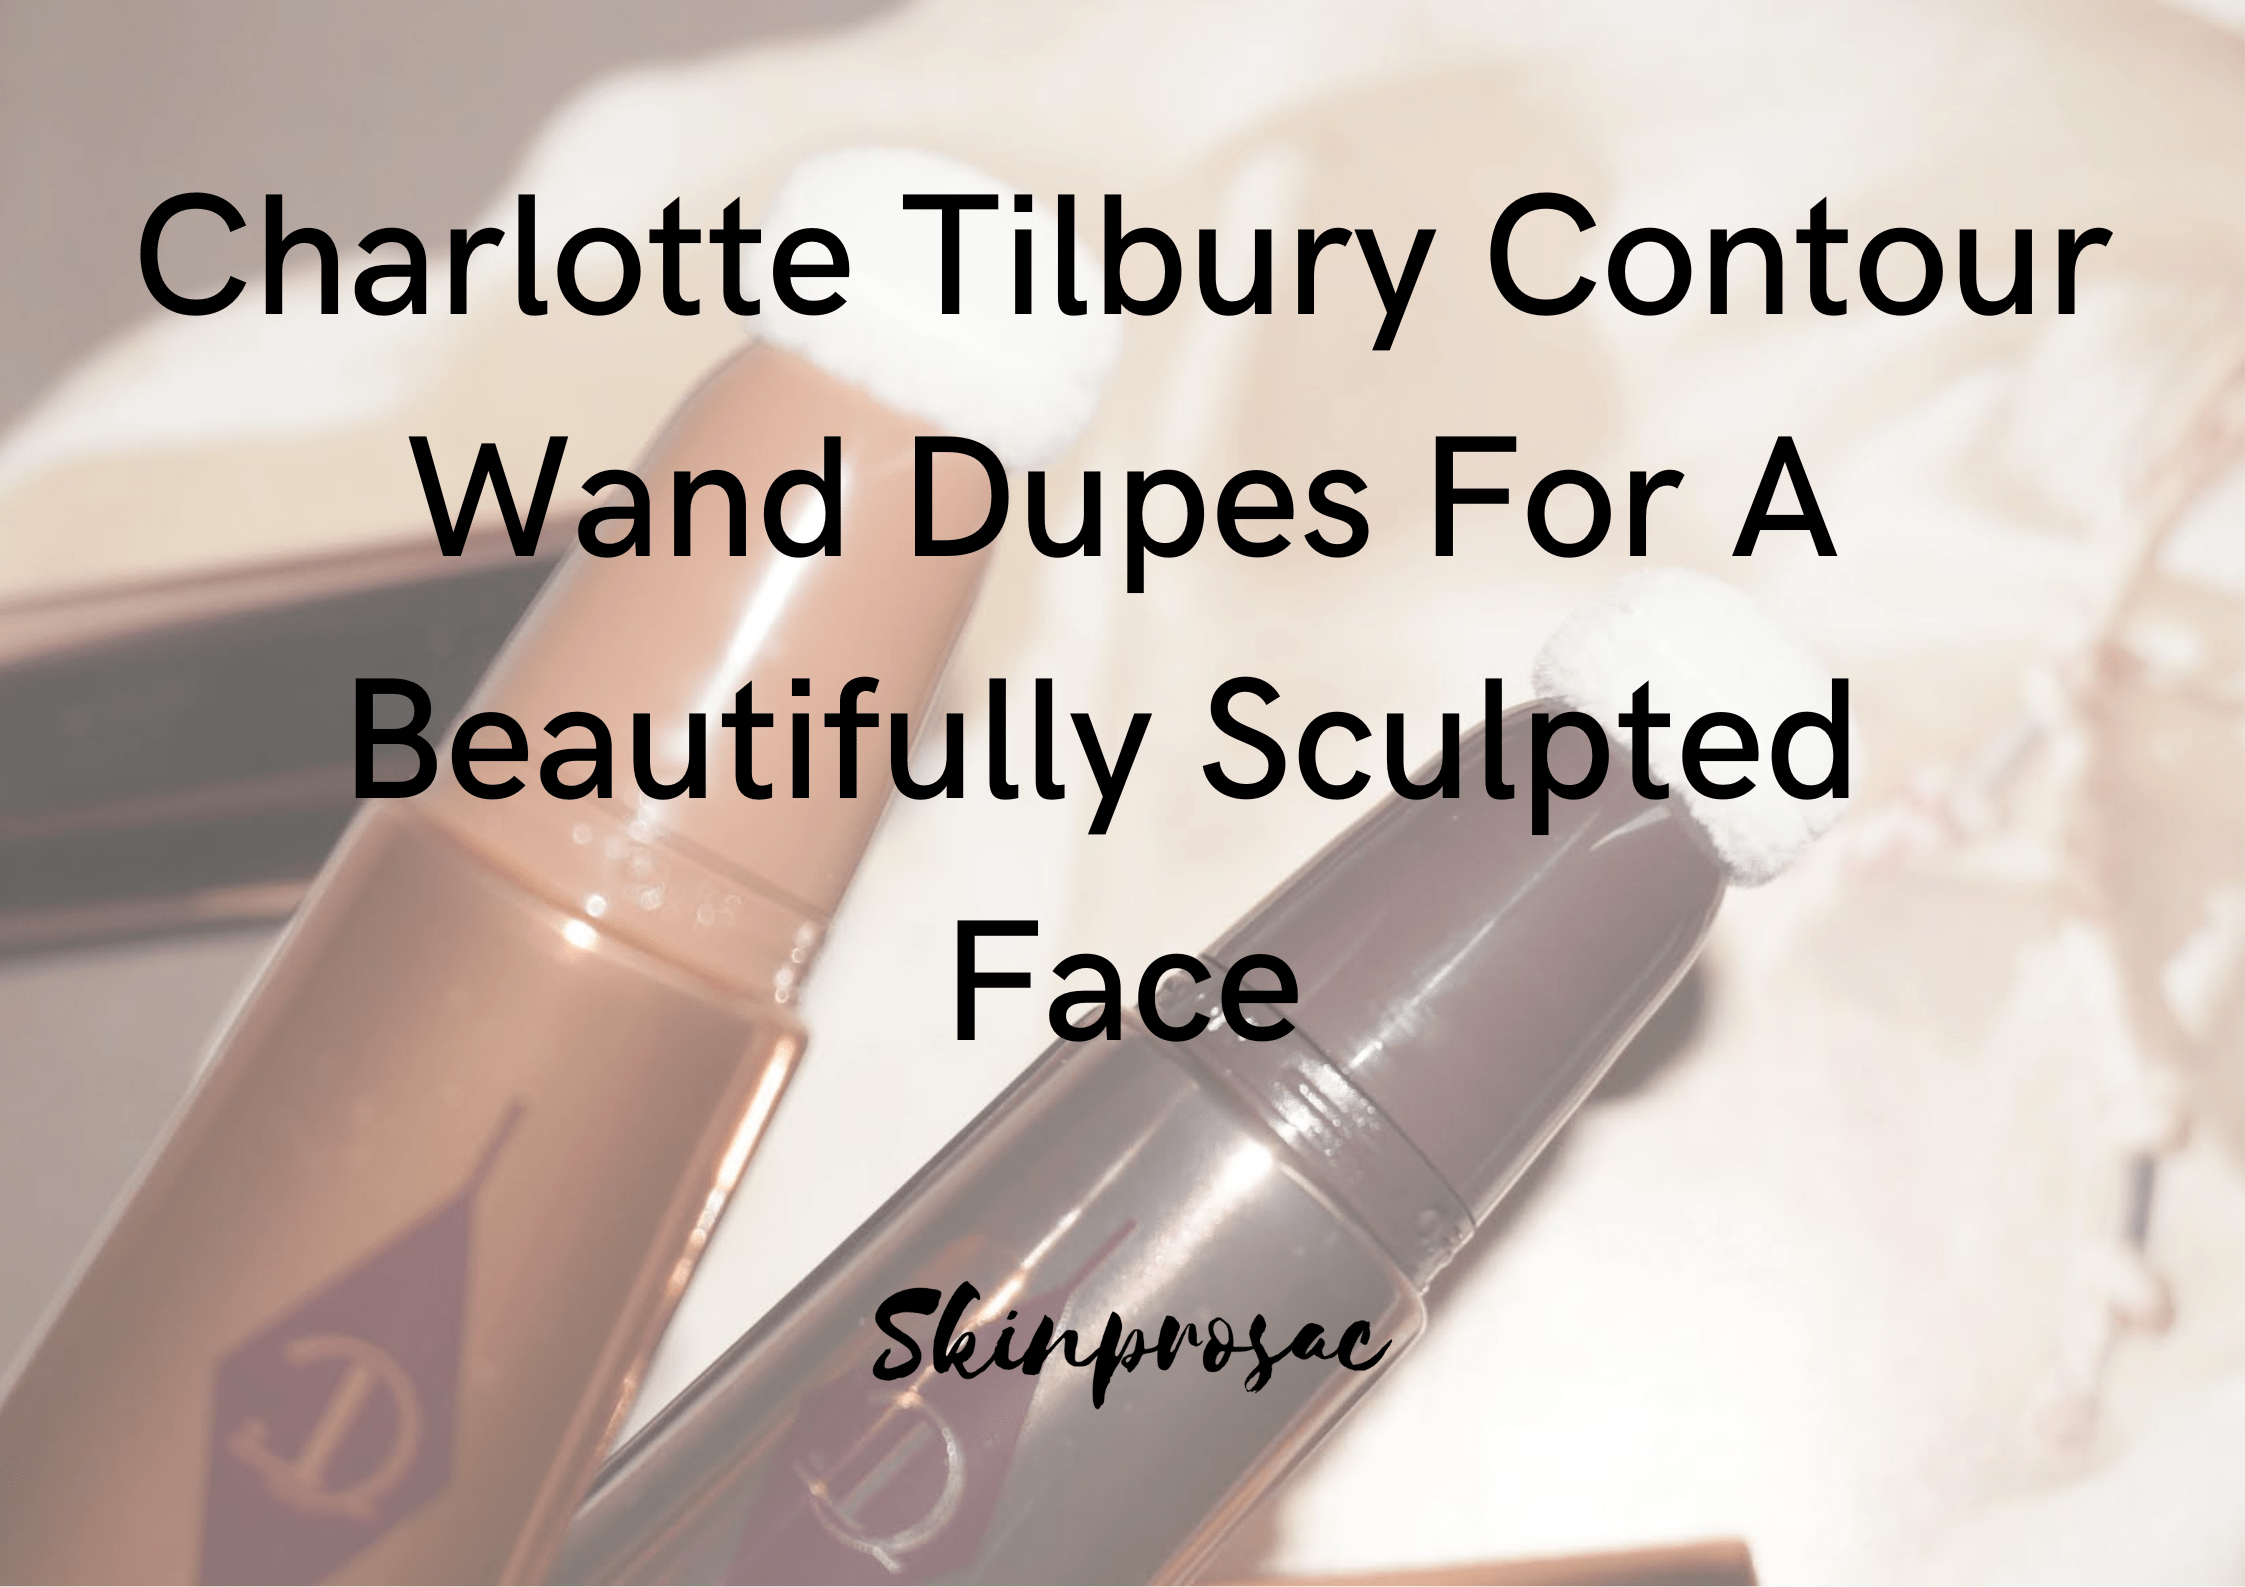 Charlotte Tilbury Contour Wand dupe